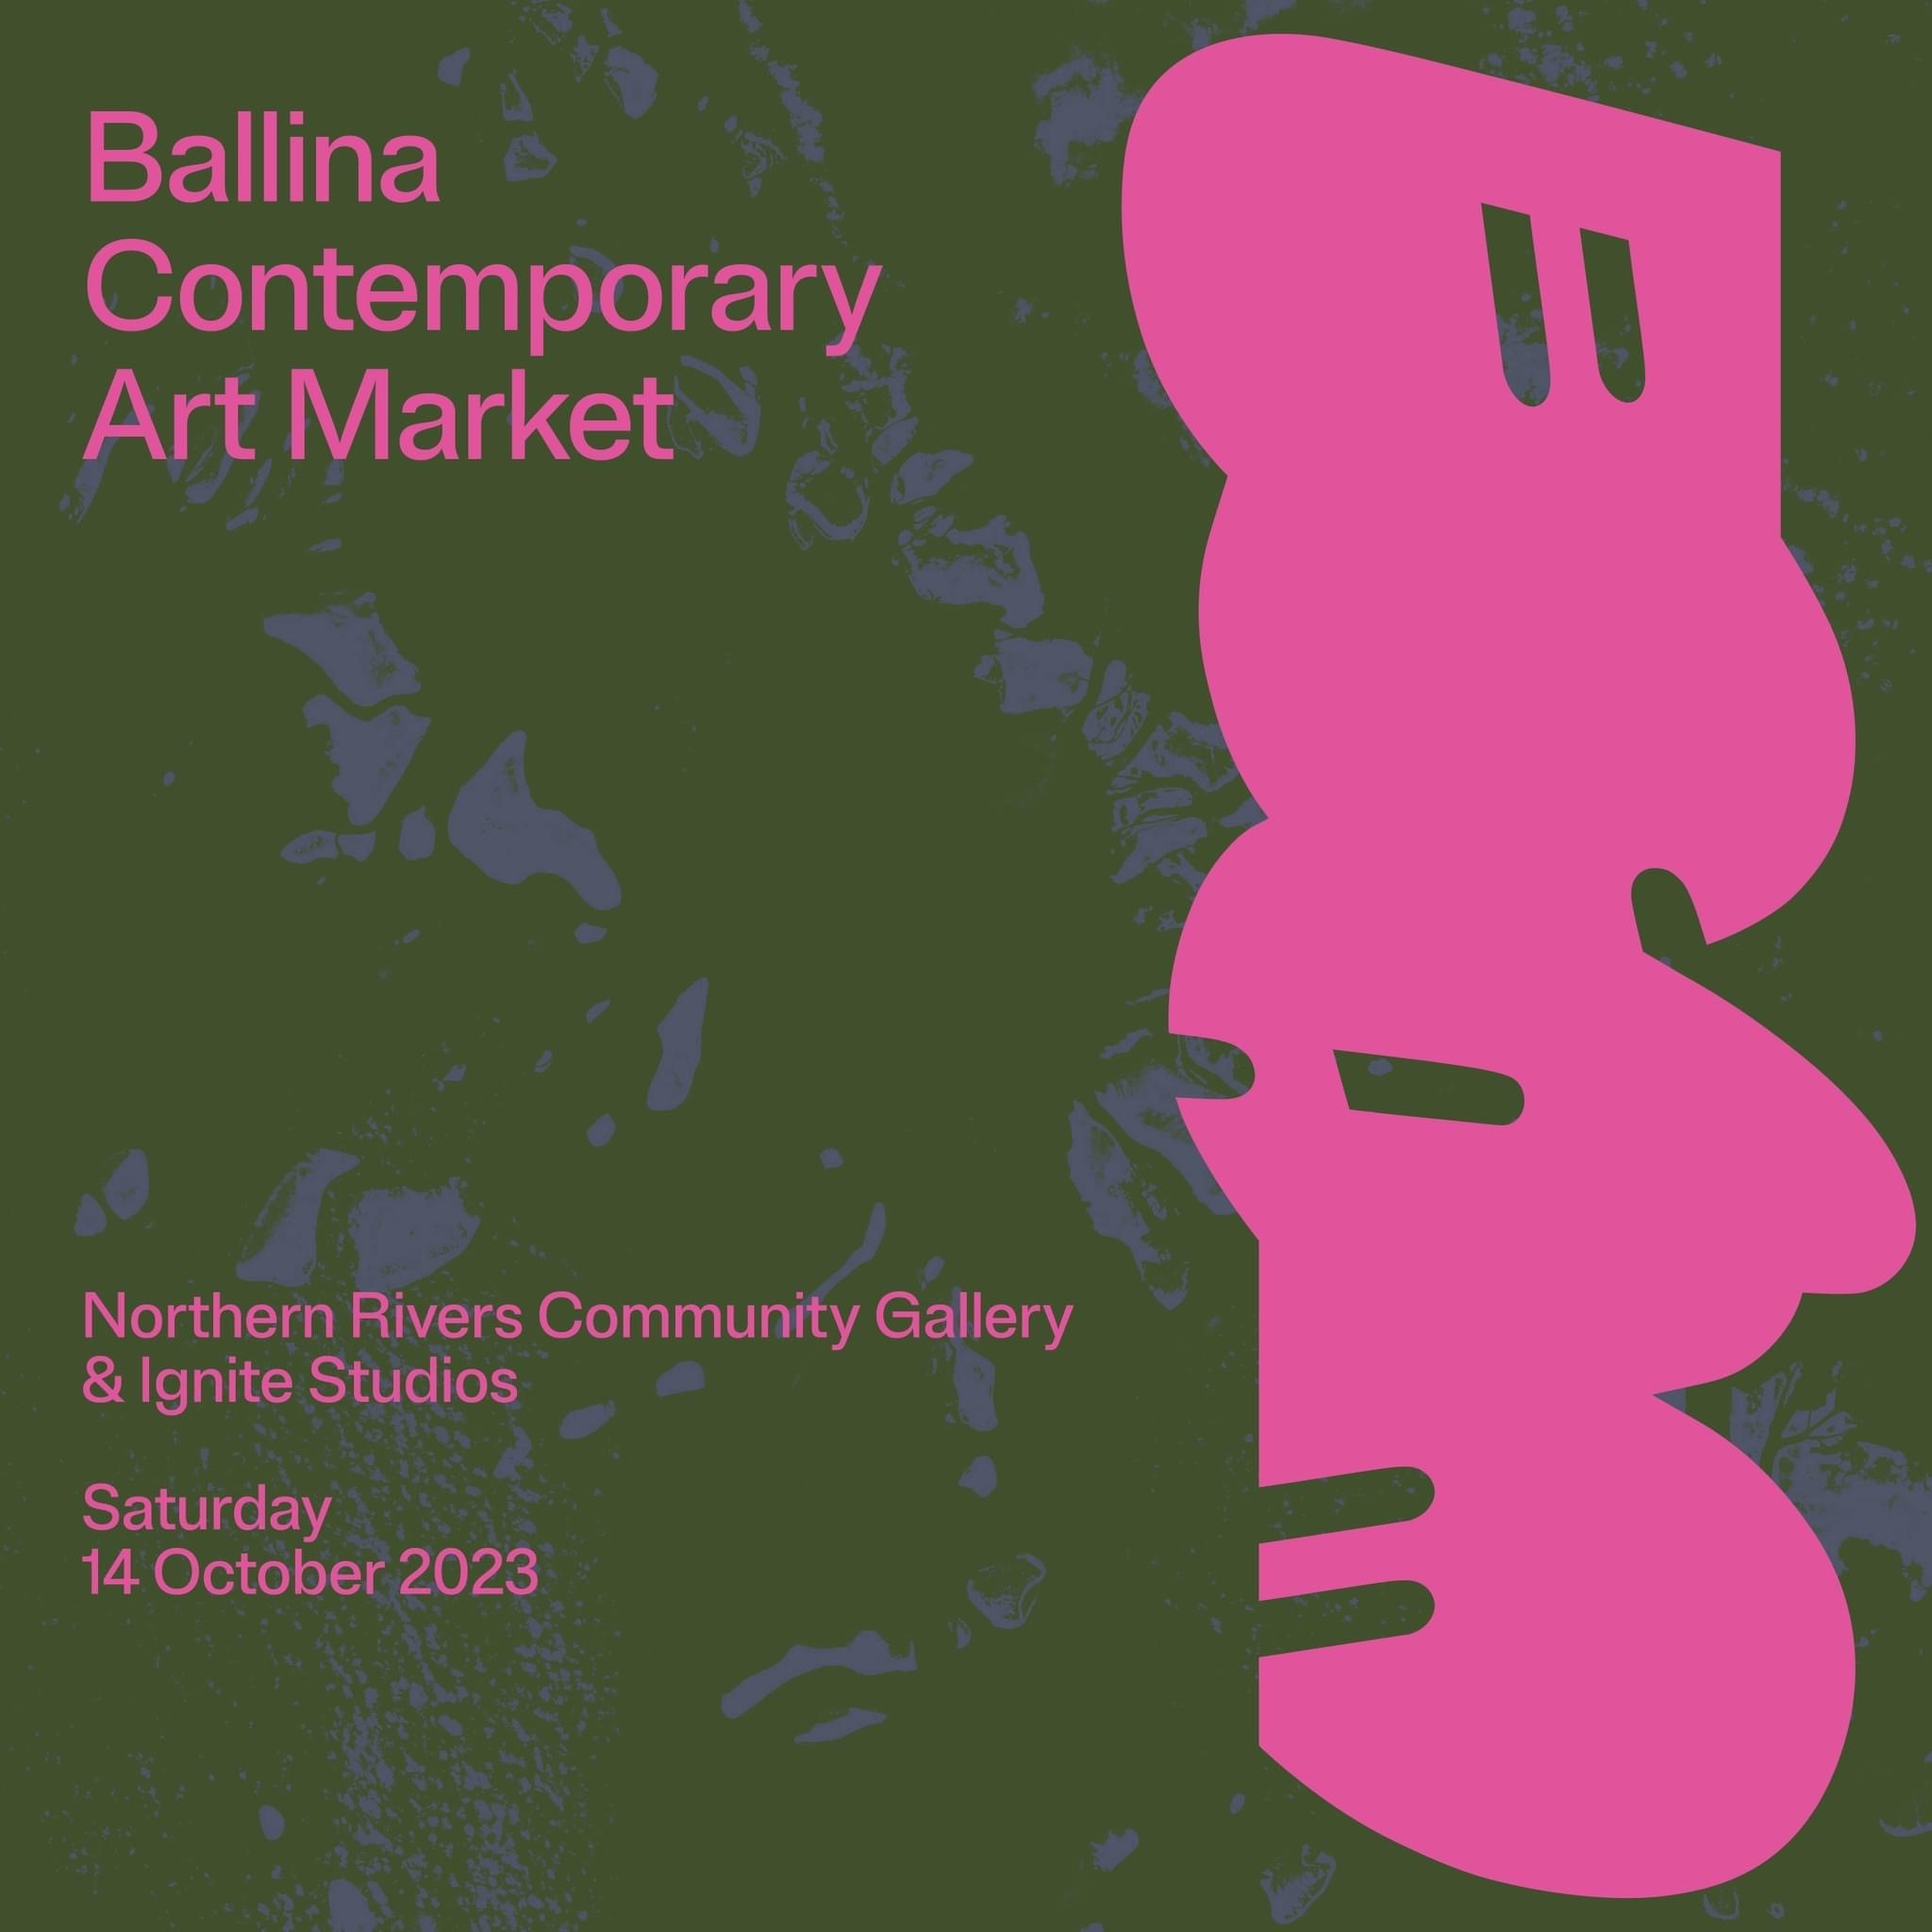 Ballina Contemporary Art Market